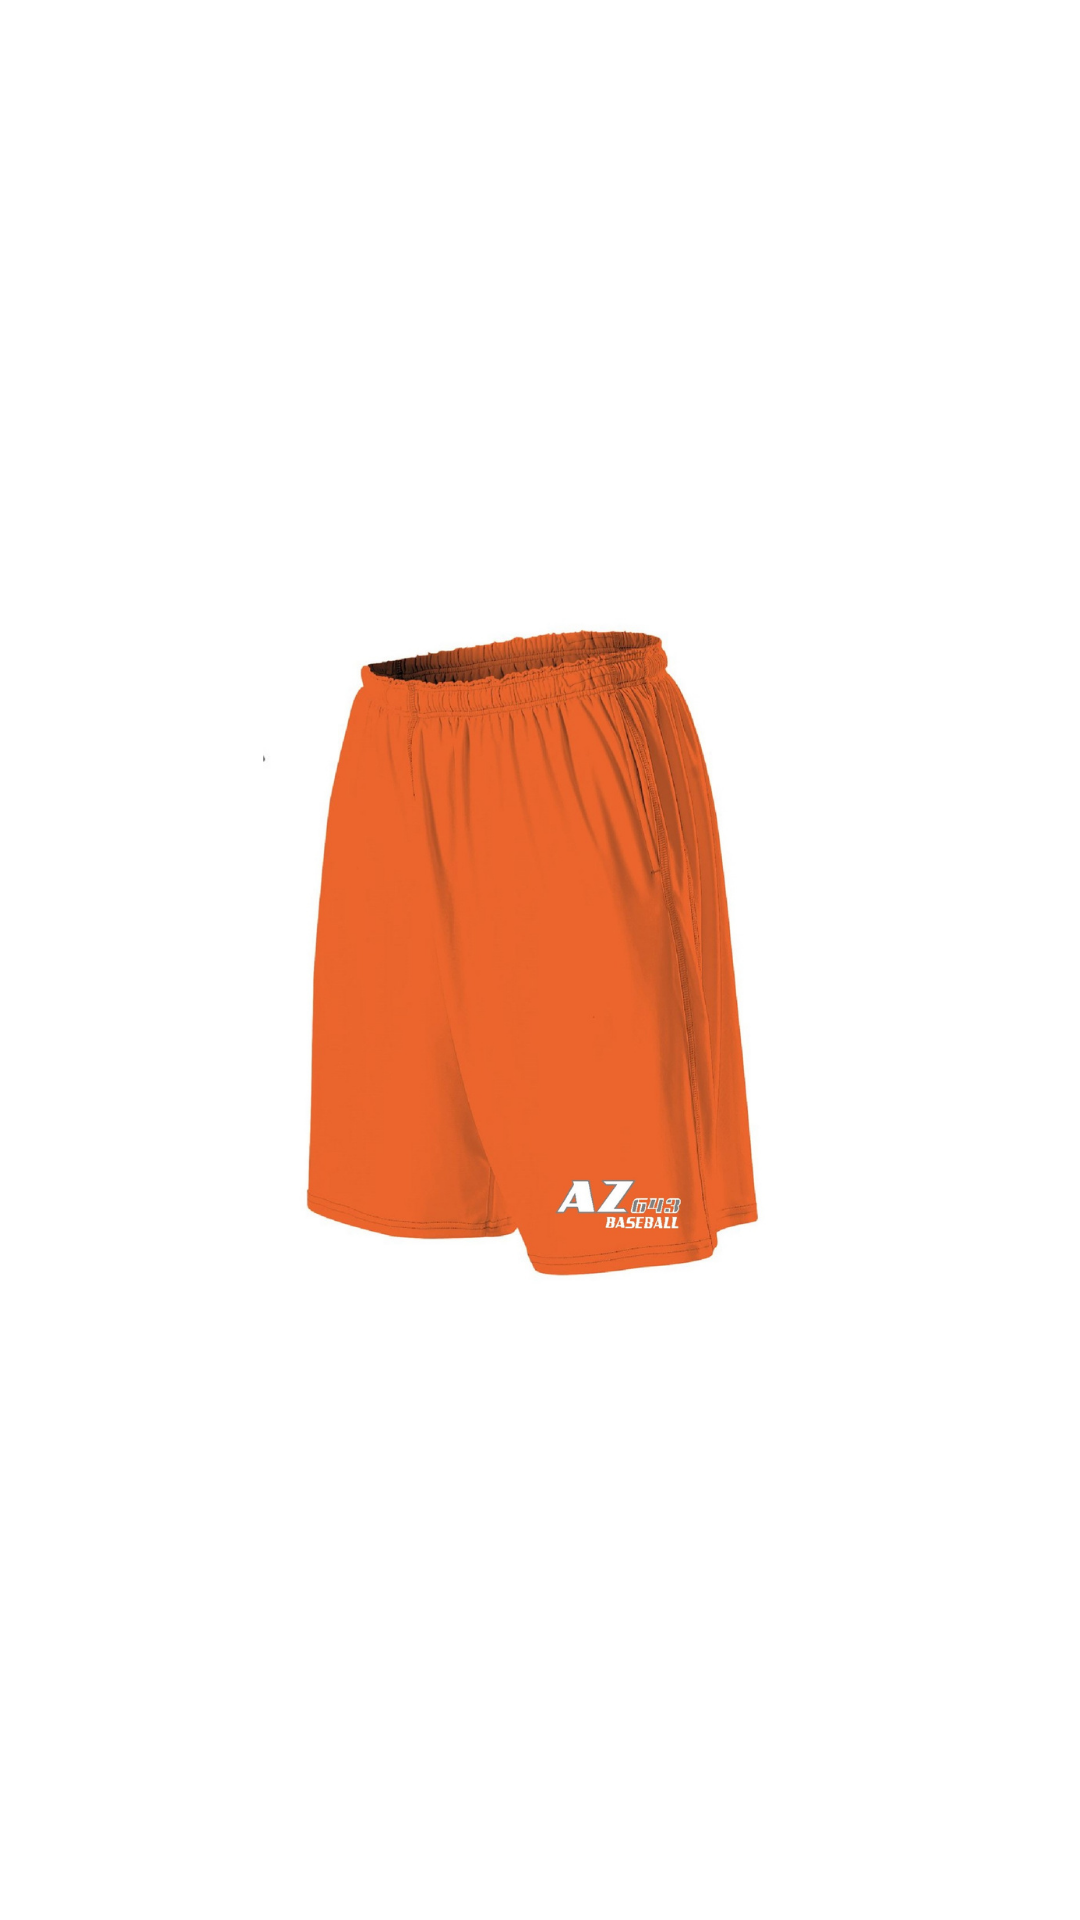 Athletic Shorts — AZ643 Baseball